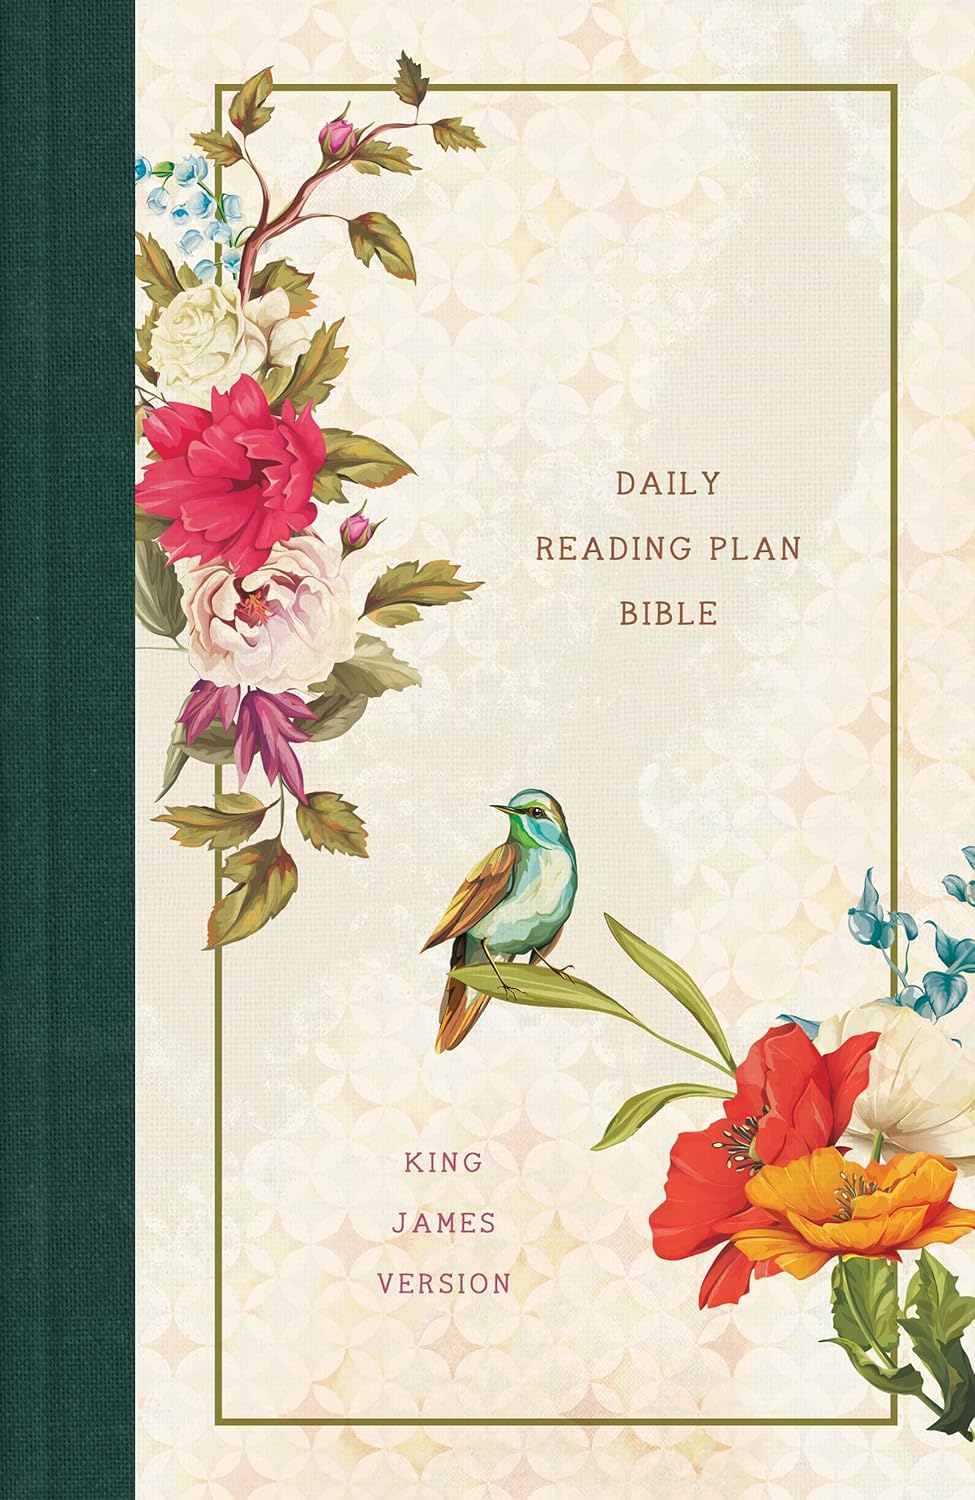 The Daily Reading Plan Bible: The KJV Version